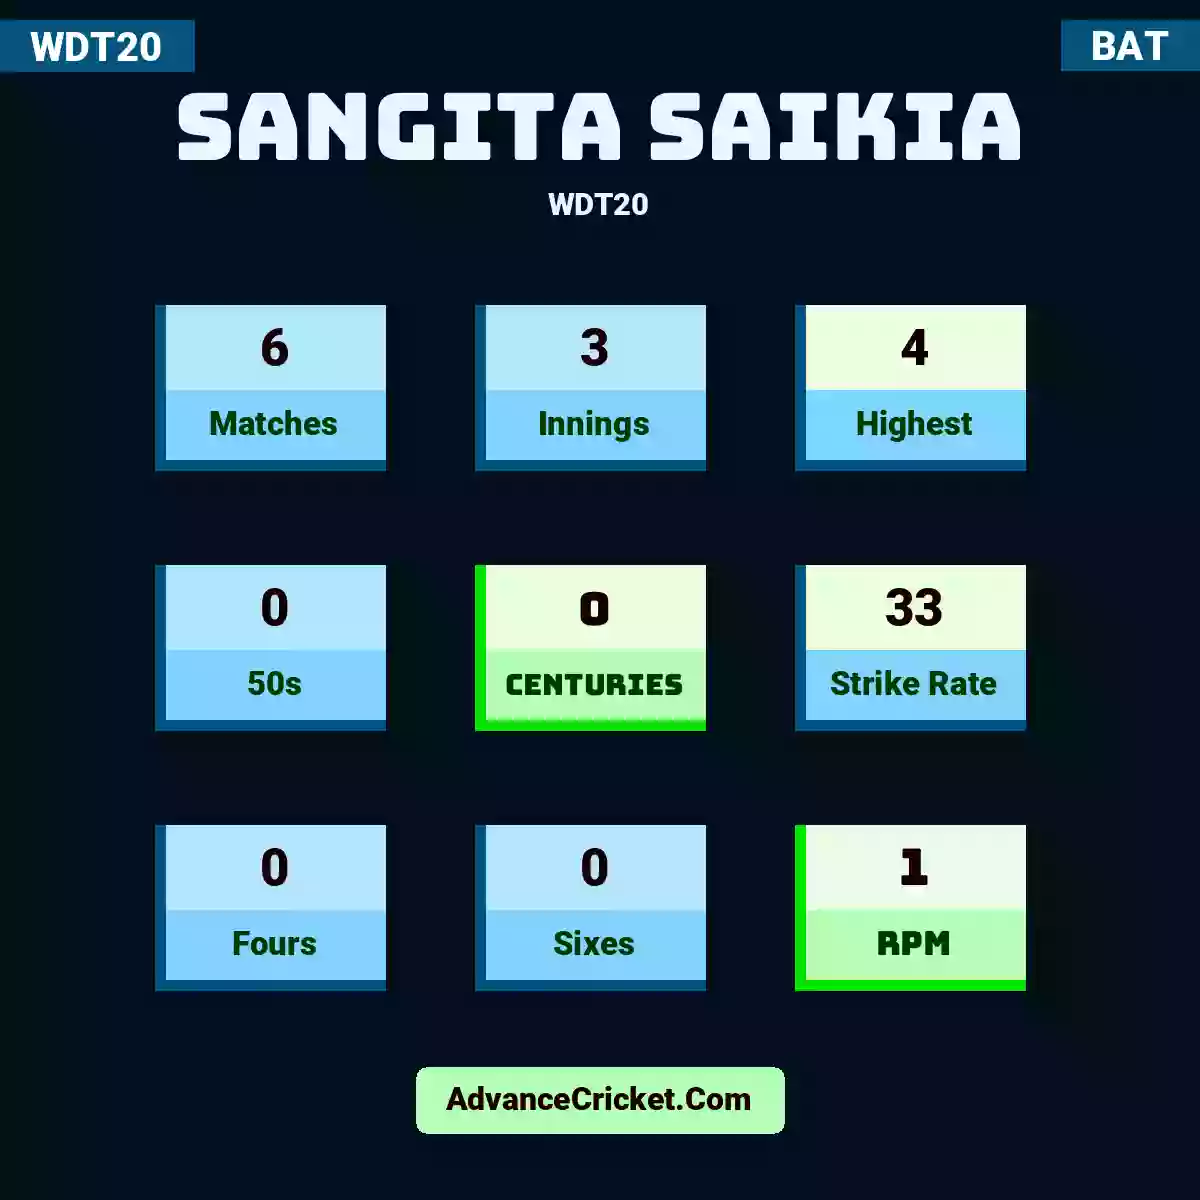 Sangita Saikia WDT20 , Sangita Saikia played 6 matches, scored 4 runs as highest, 0 half-centuries, and 0 centuries, with a strike rate of 33. s.saikia hit 0 fours and 0 sixes, with an RPM of 1.